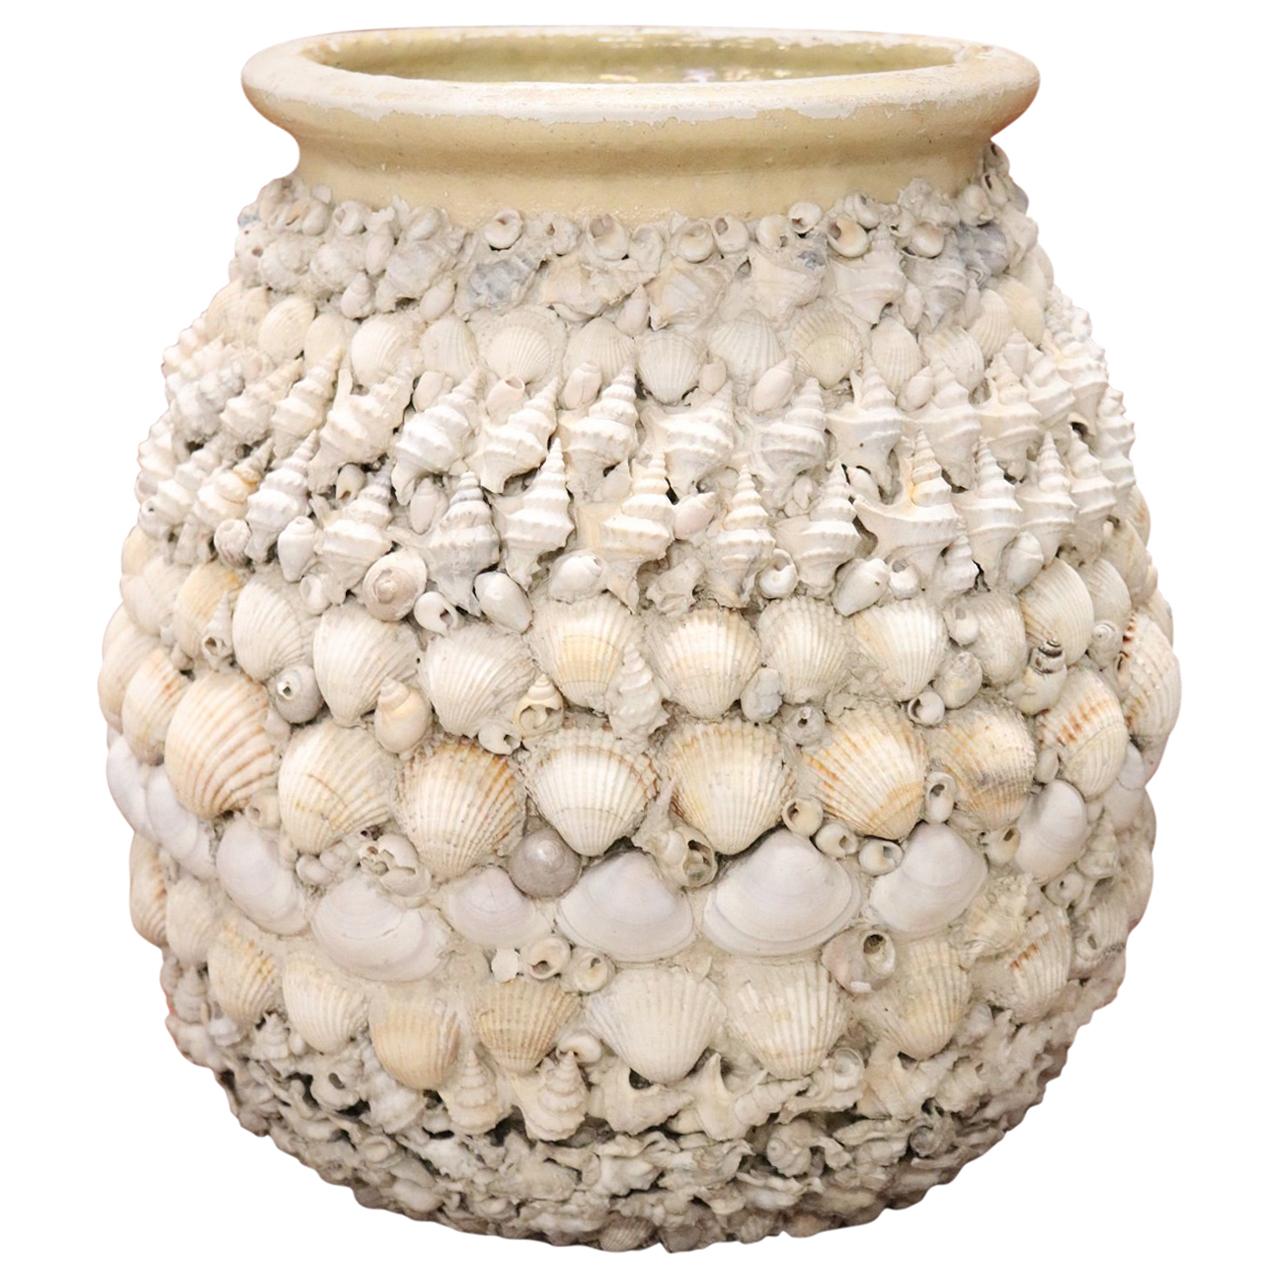 20th Century Italian Vintage Artistic Vase in Ceramic and Shells